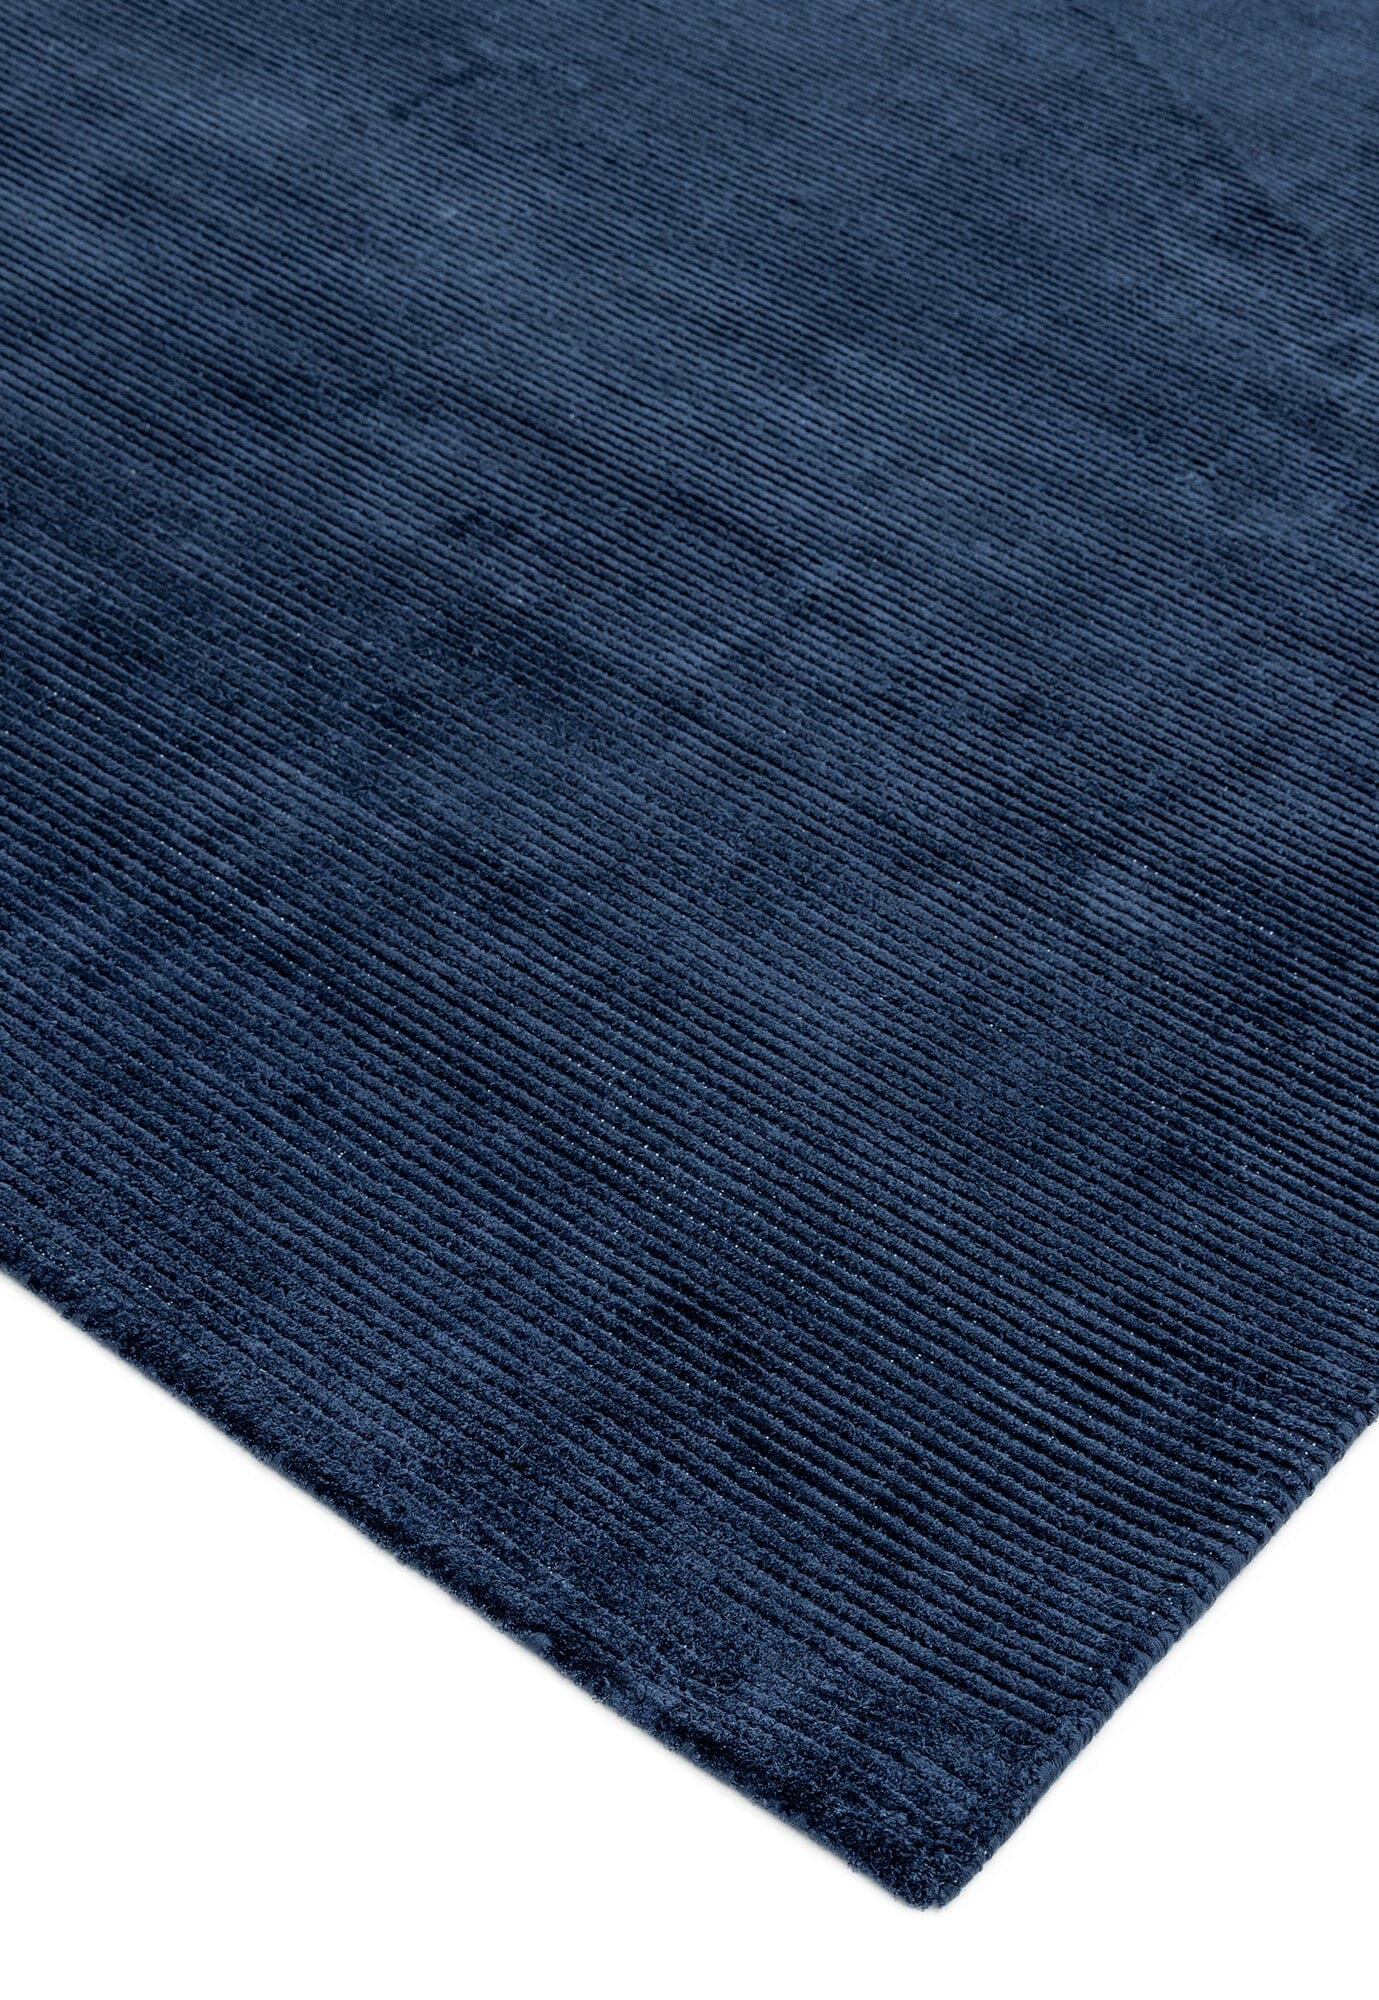  Asiatic Carpets-Asiatic Carpets Reko Hand Woven Rug Navy - 160 x 230cm-Blue 565 